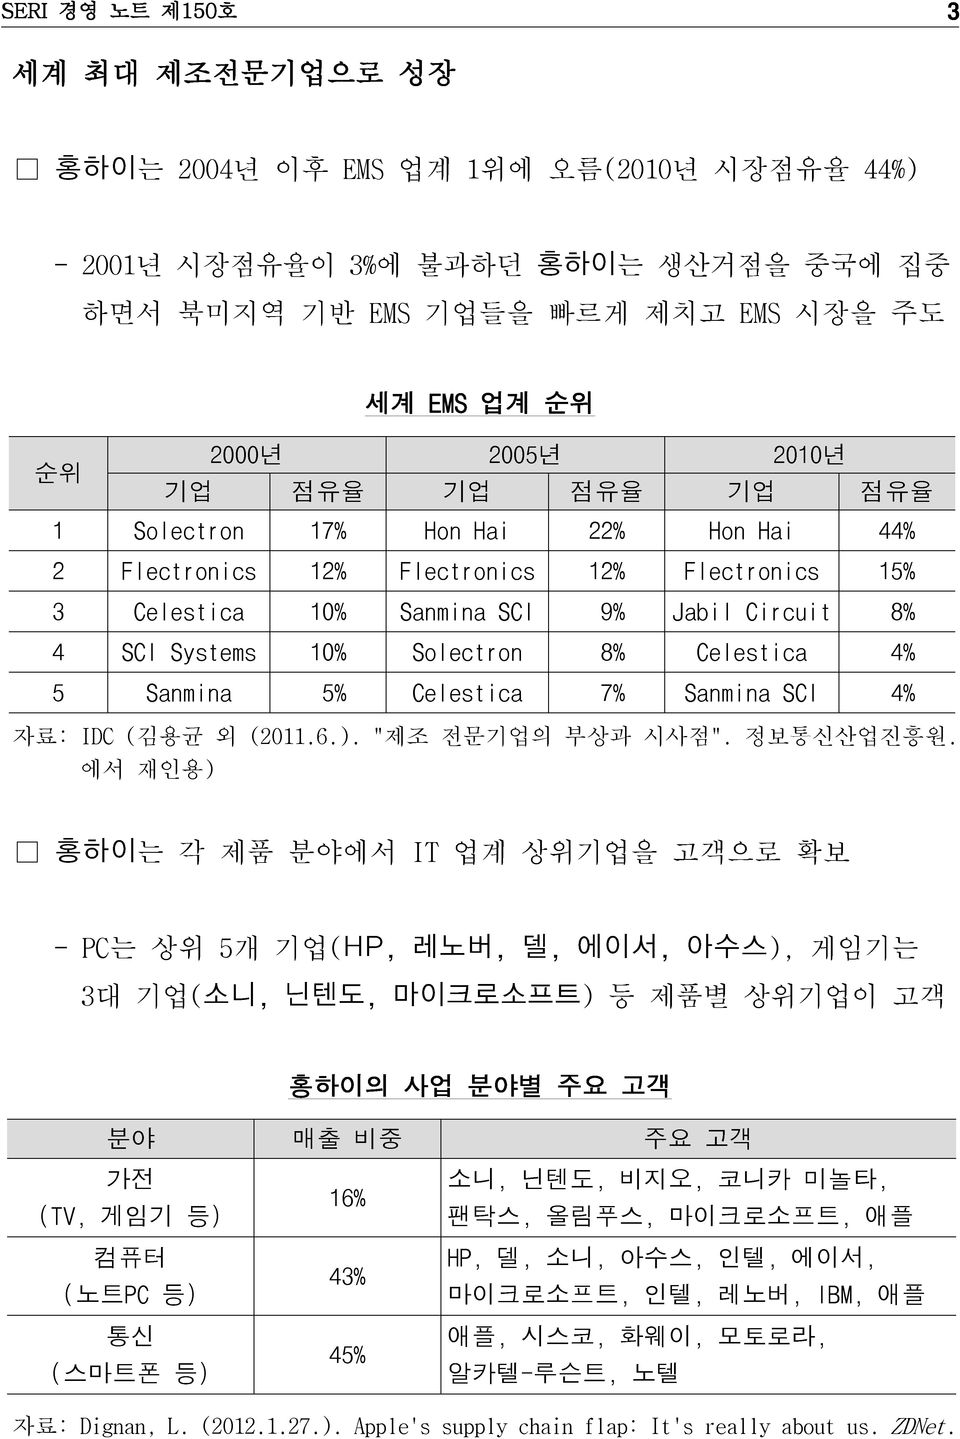 Celestica 7% Sanmina SCI 4% 자료: IDC (김용균 외 (2011.6.). "제조 전문기업의 부상과 시사점". 정보통신산업진흥원.